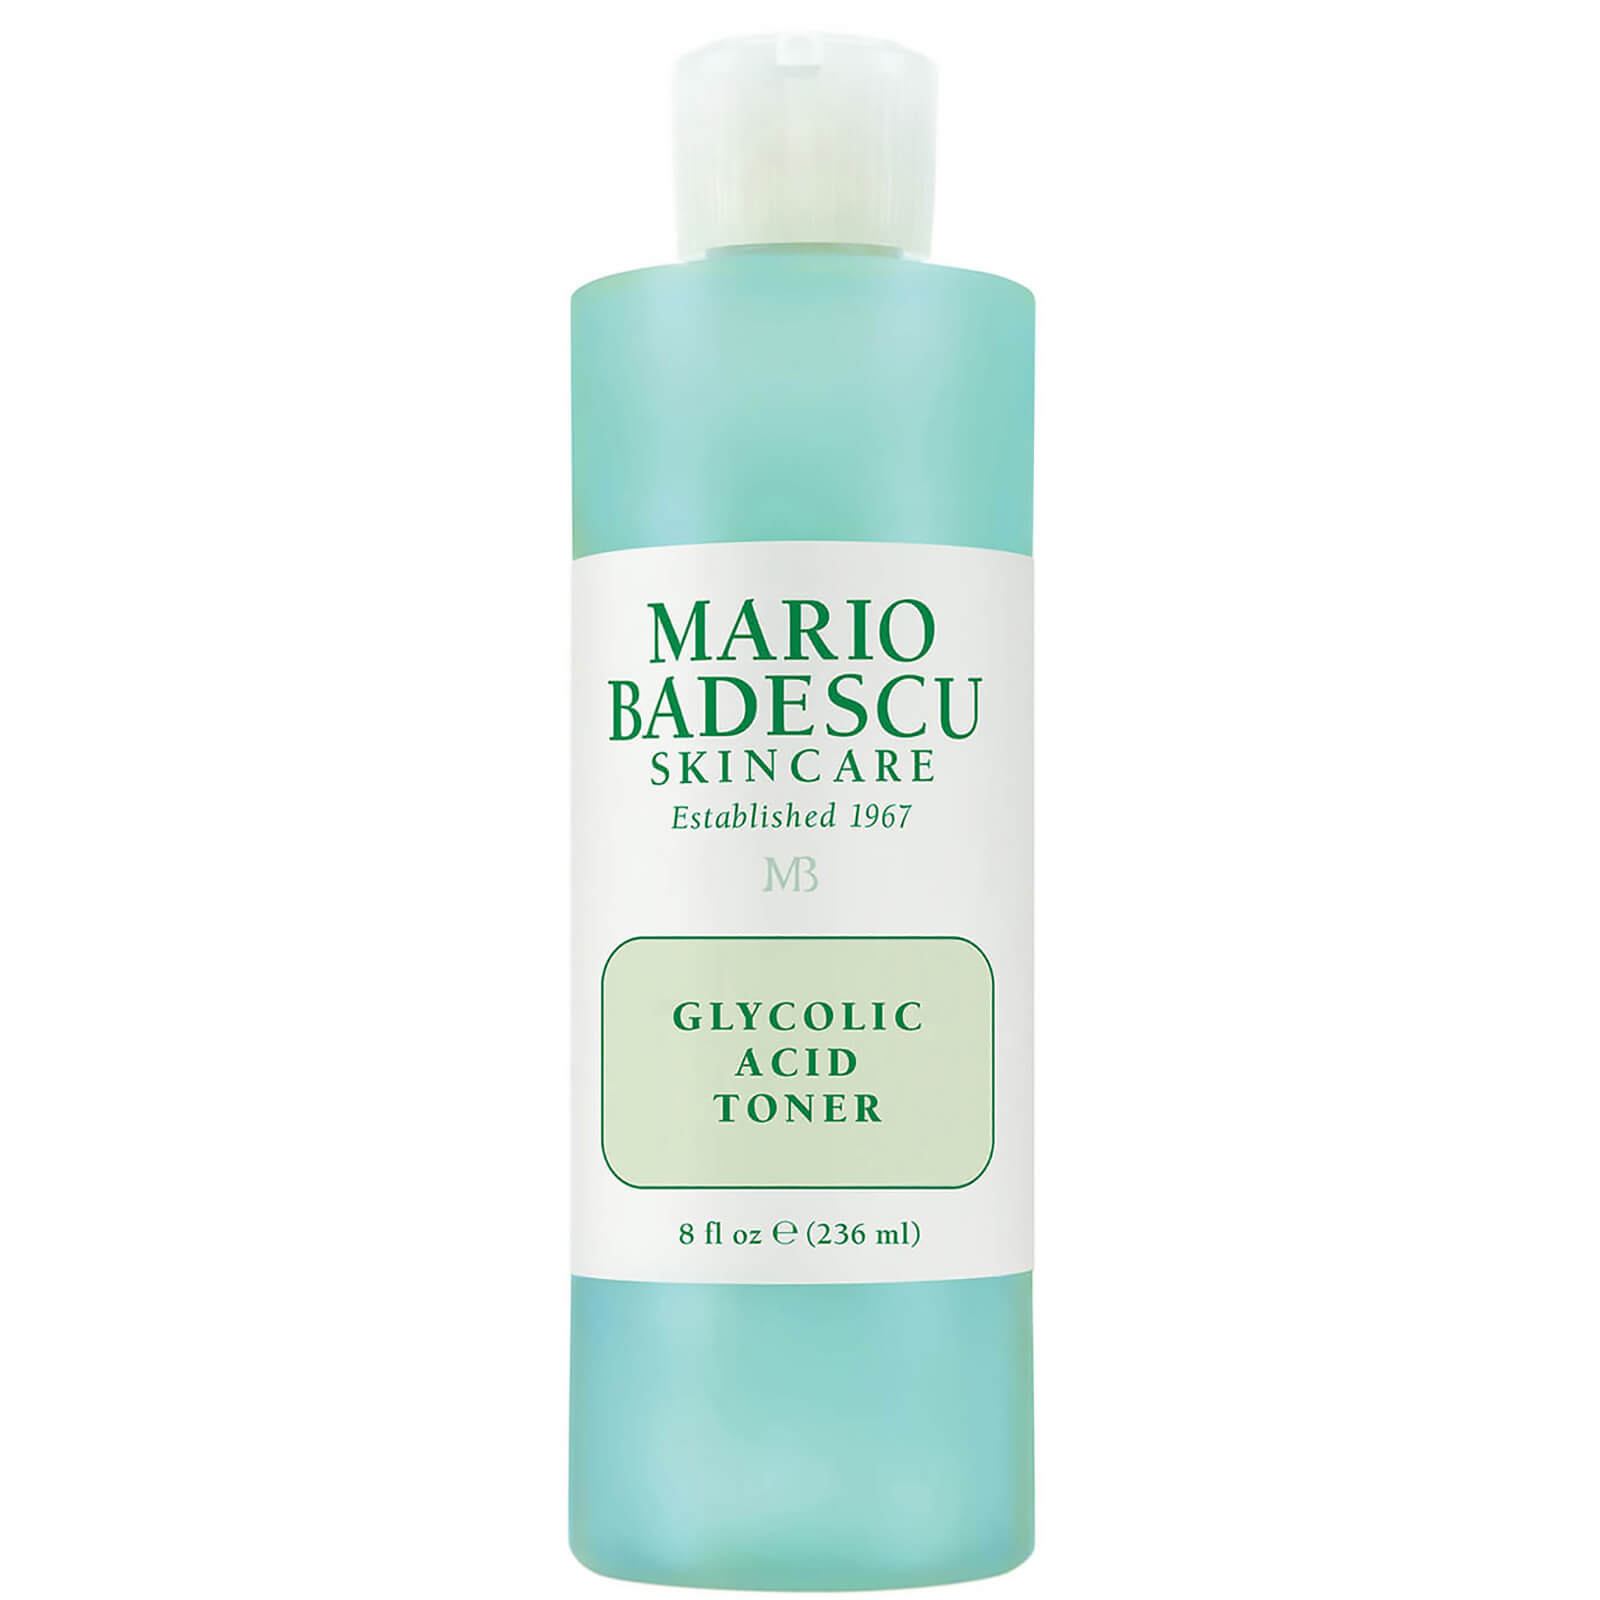 Photos - Facial / Body Cleansing Product Mario Badescu Glycolic Acid Toner